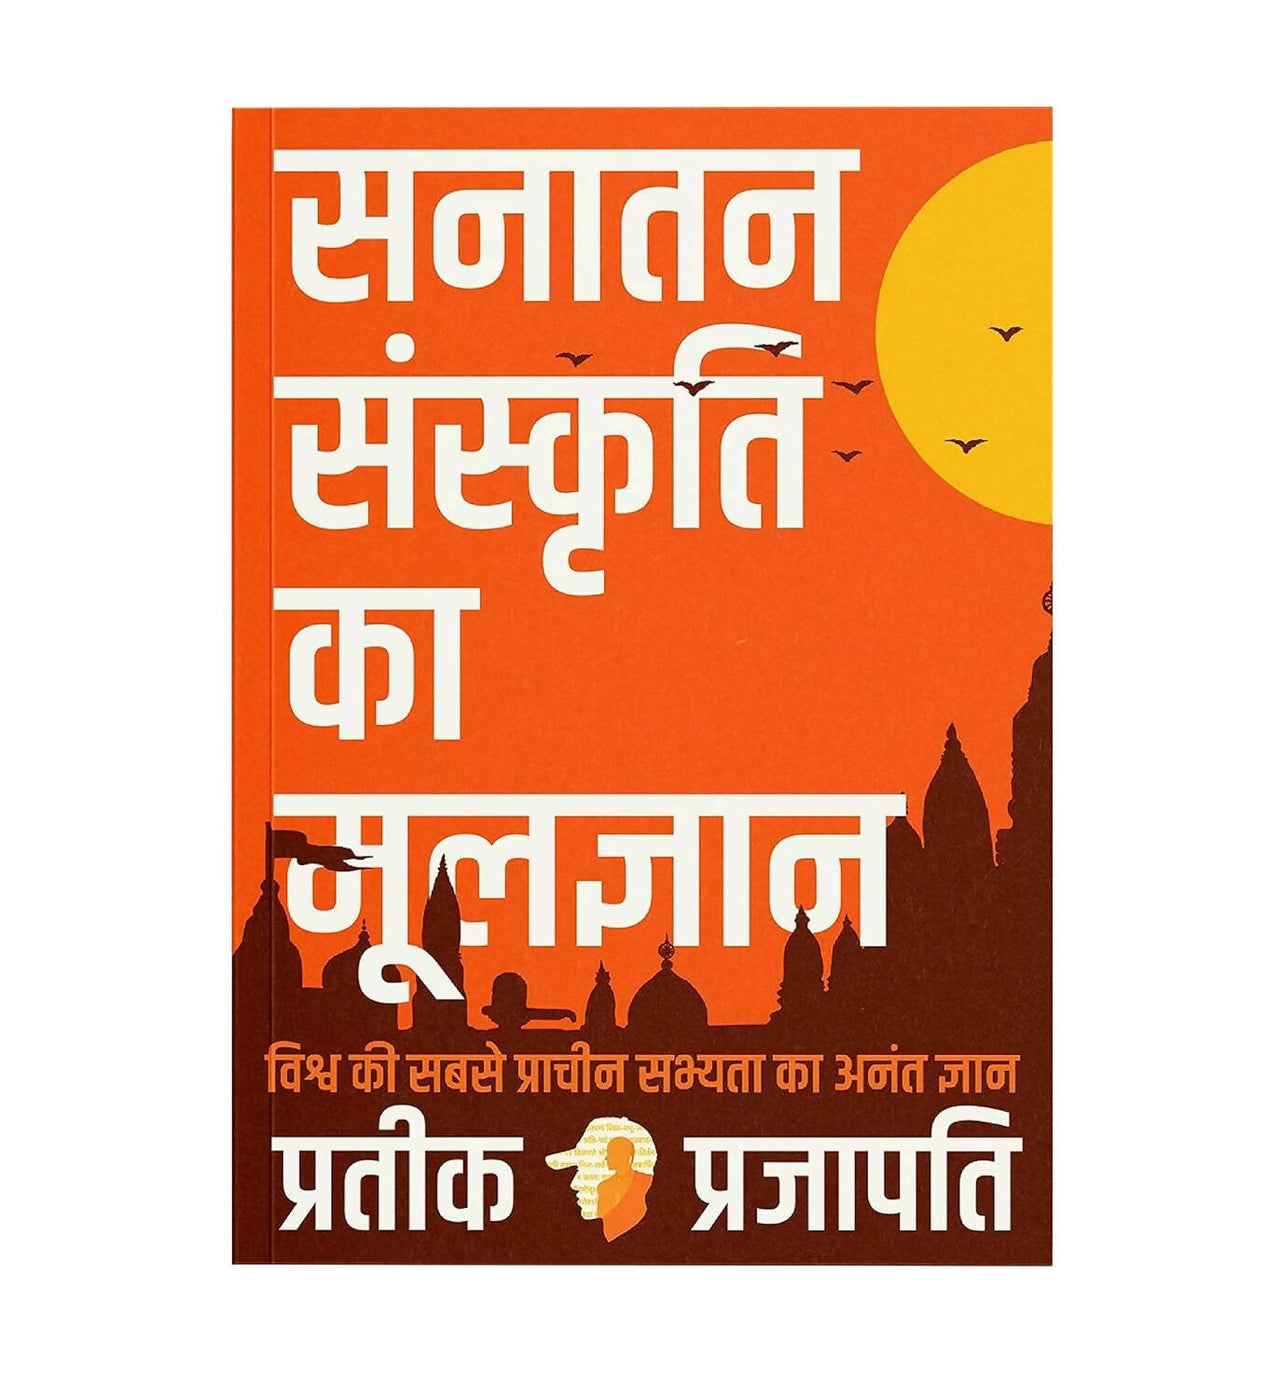 B.O.S.S (Hindi Version) Basics of Sanatan Sanskriti By Prateeik Prajapati - Distacart